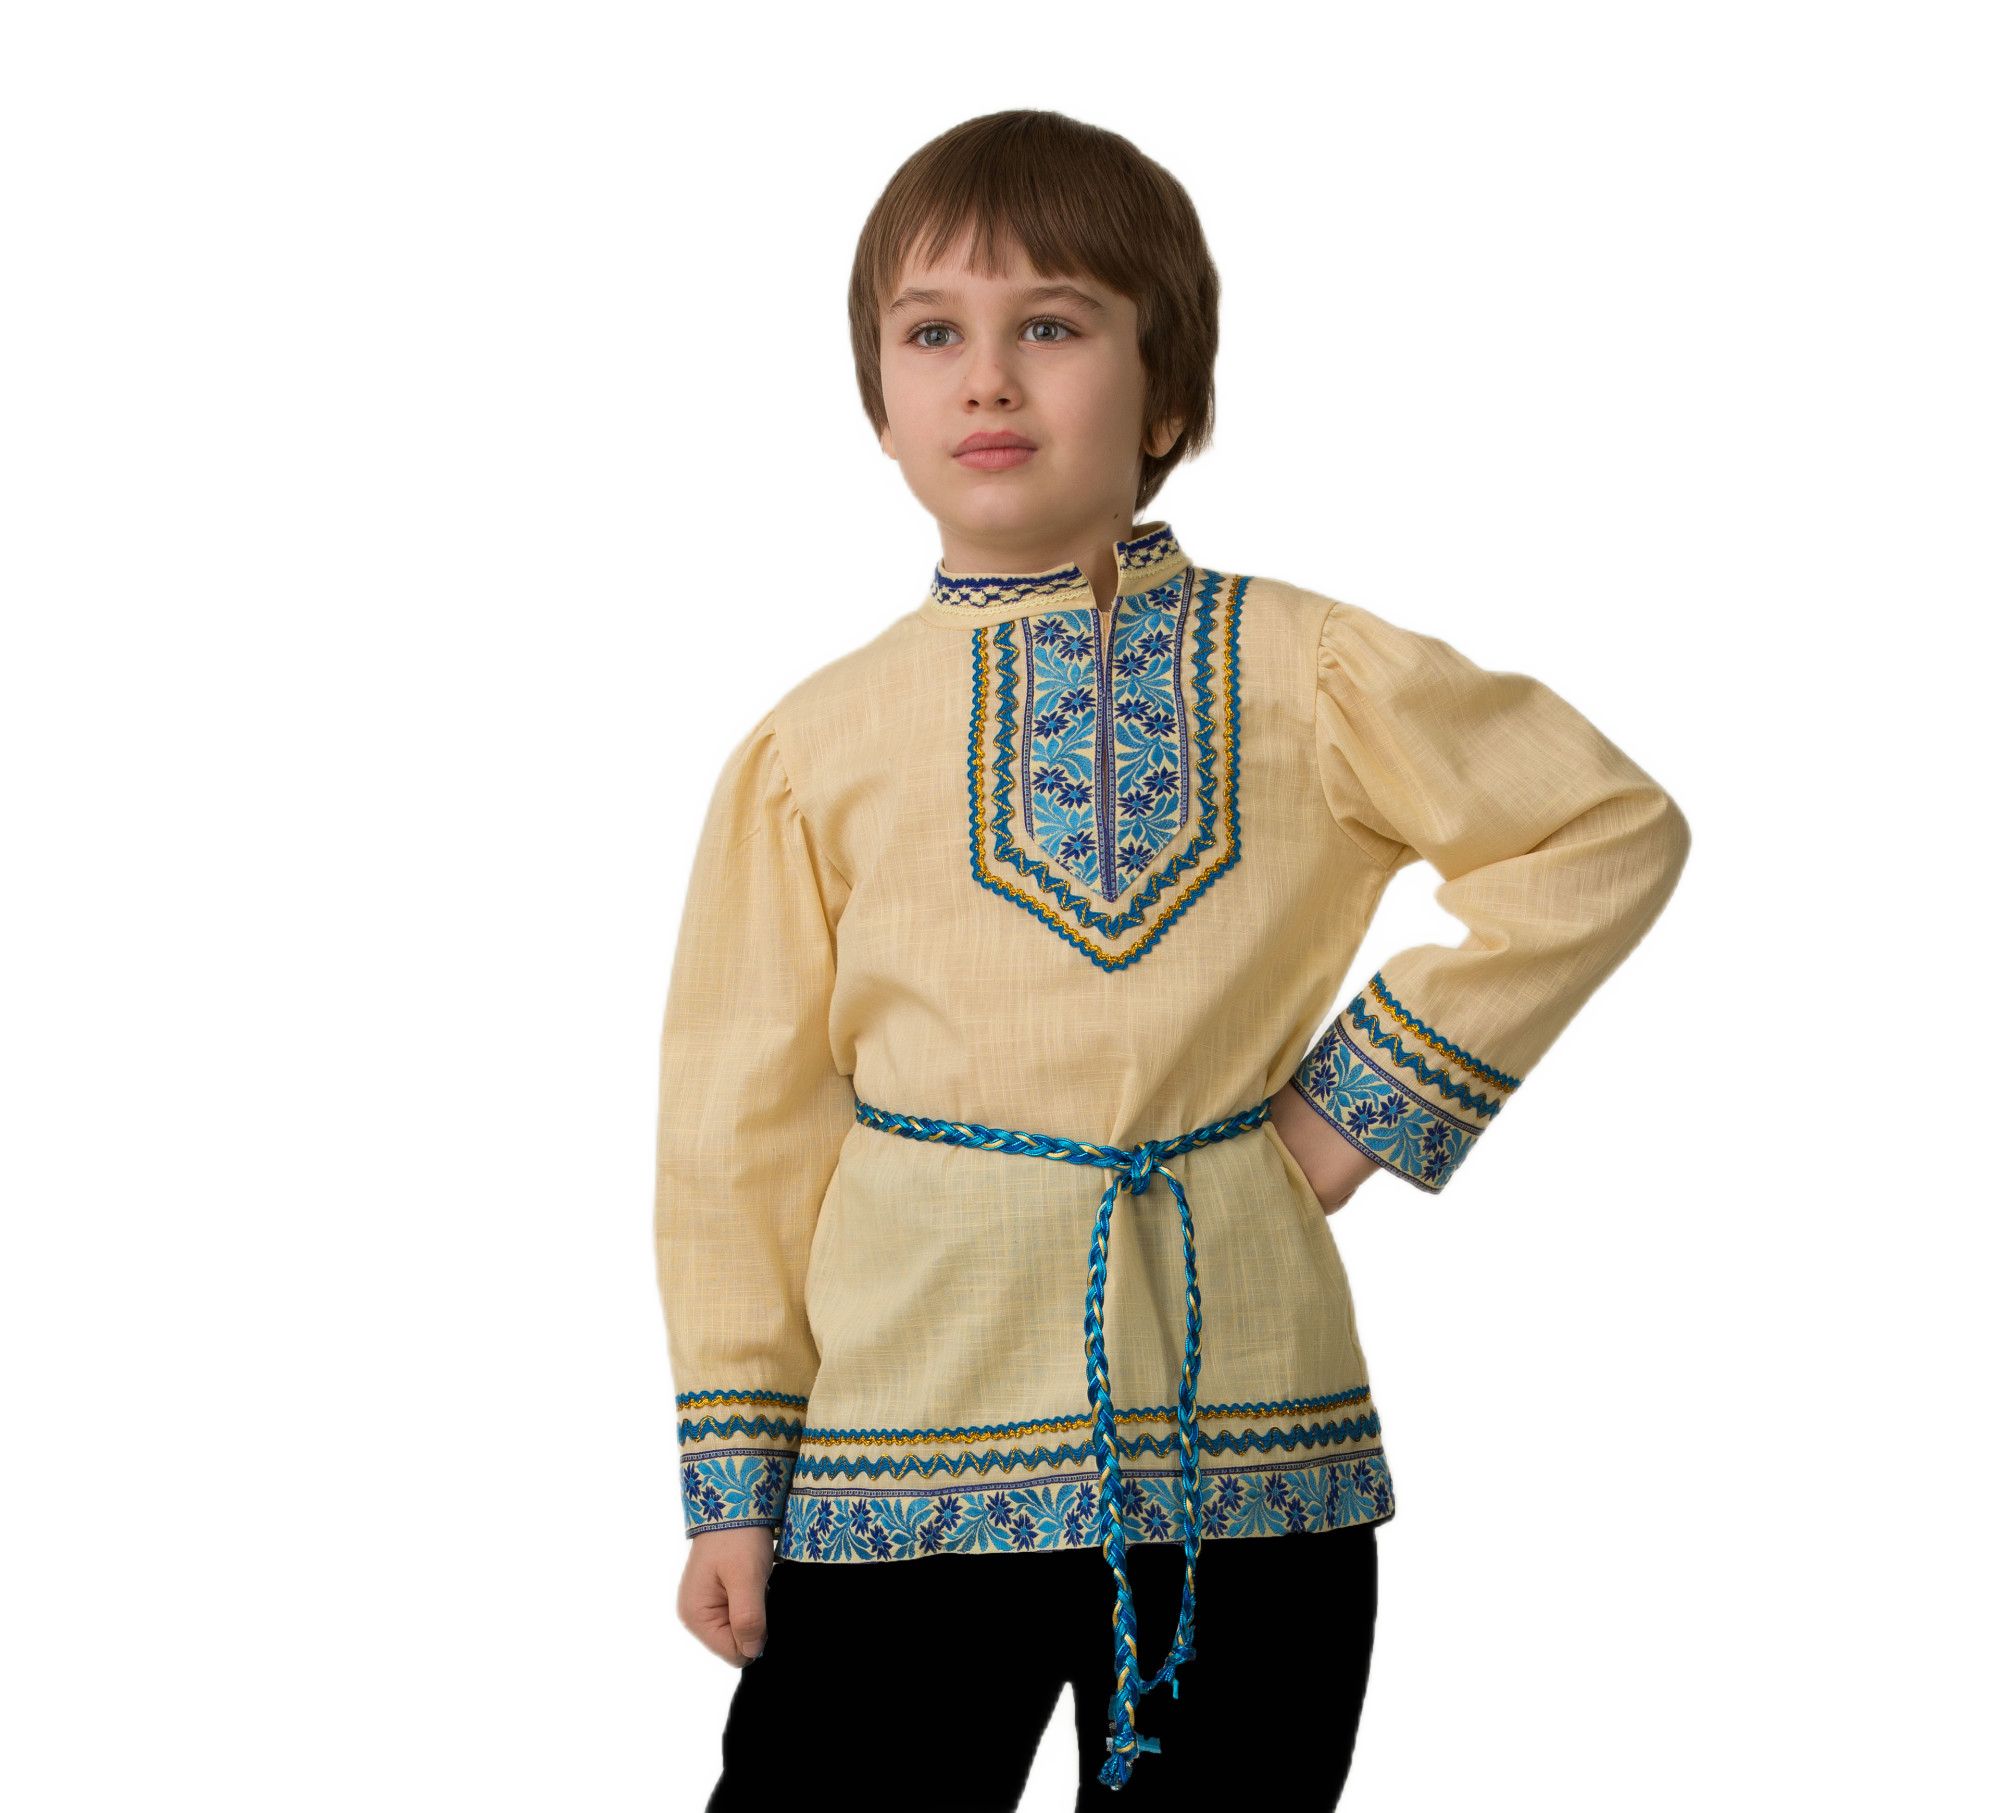 фото Рубашка вышиванка jeanees батик народный костюм, арт. 5605-1, размер: 128-64